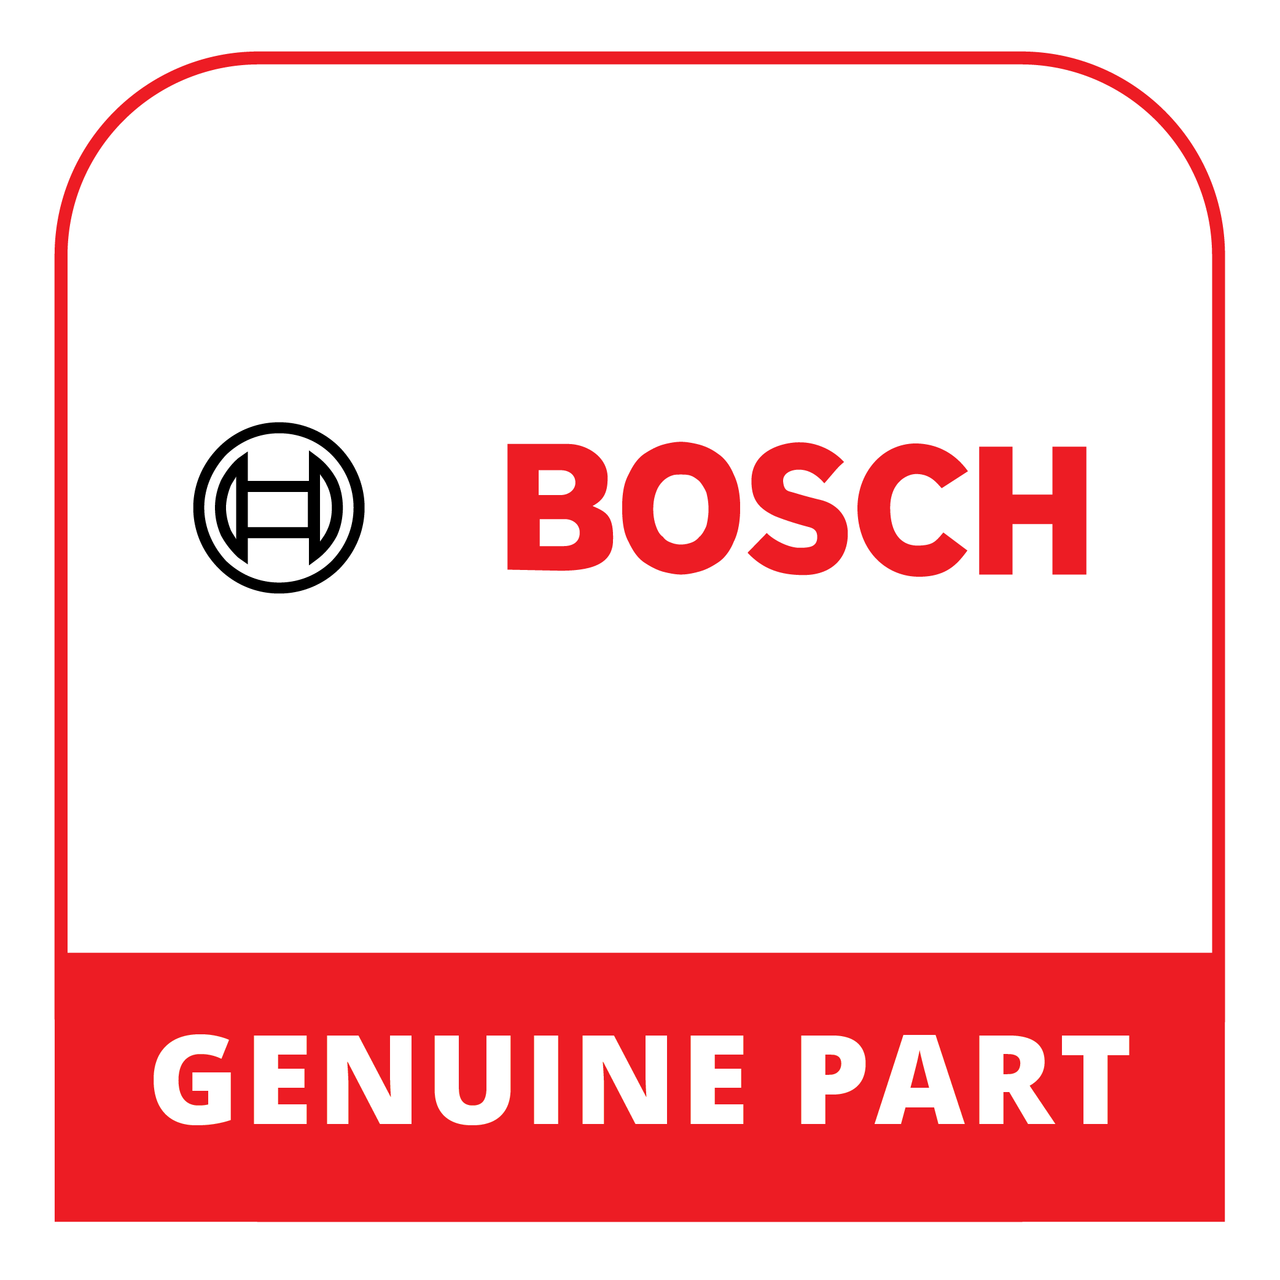 Bosch (Thermador) 10011639 - Bracket - Genuine Bosch (Thermador) Part